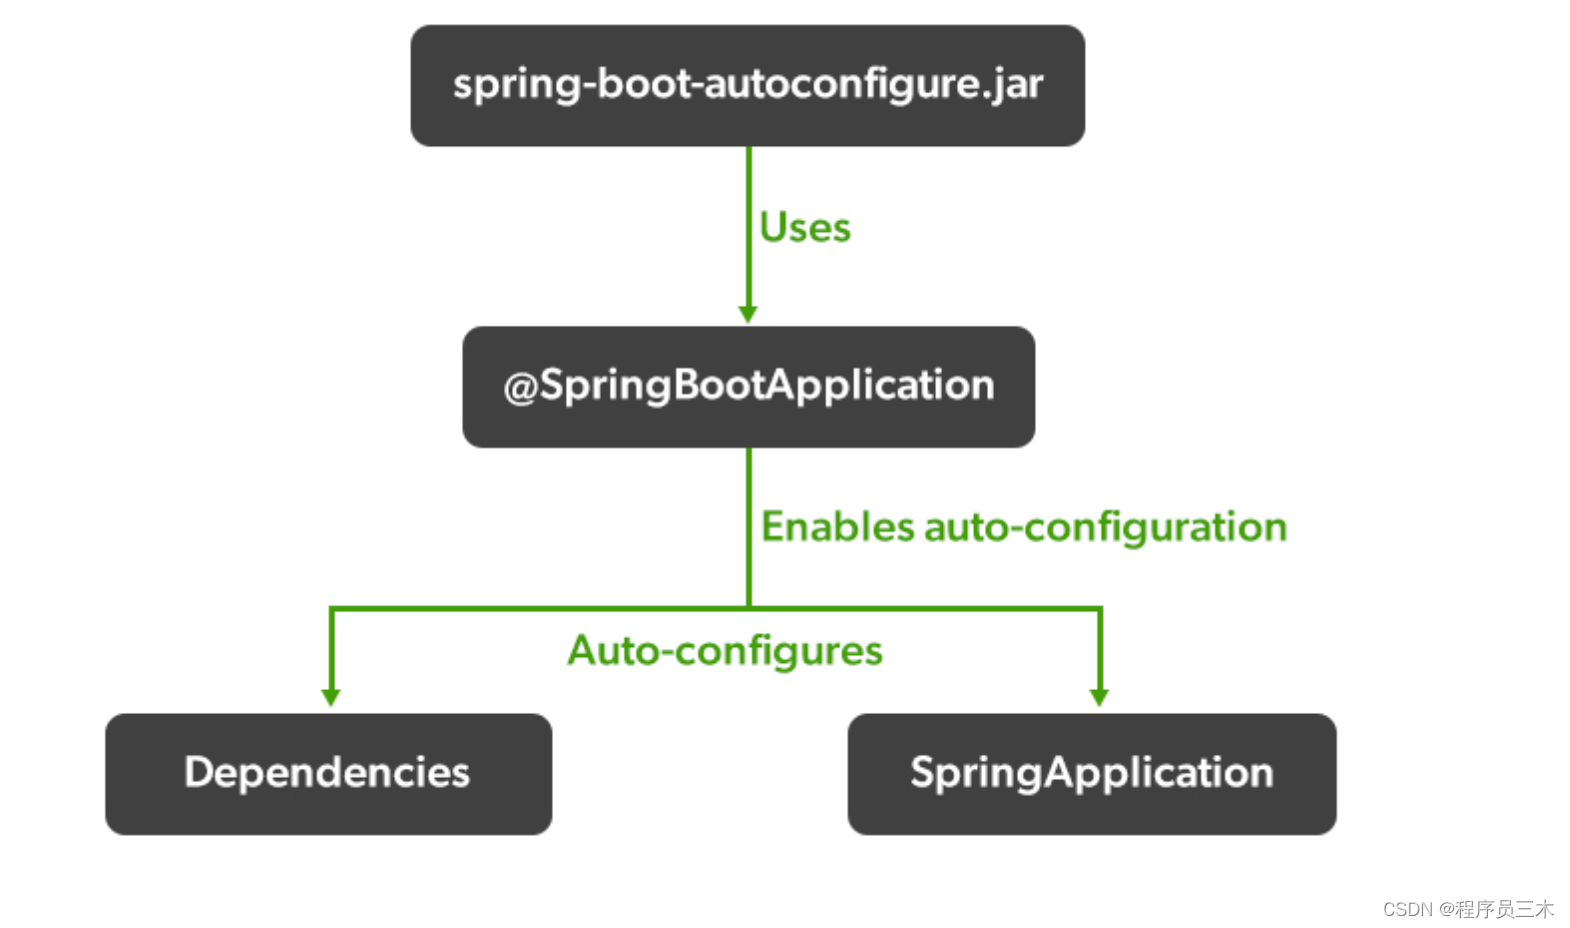 [AIGC] Springboot 自动配置的作用及理由